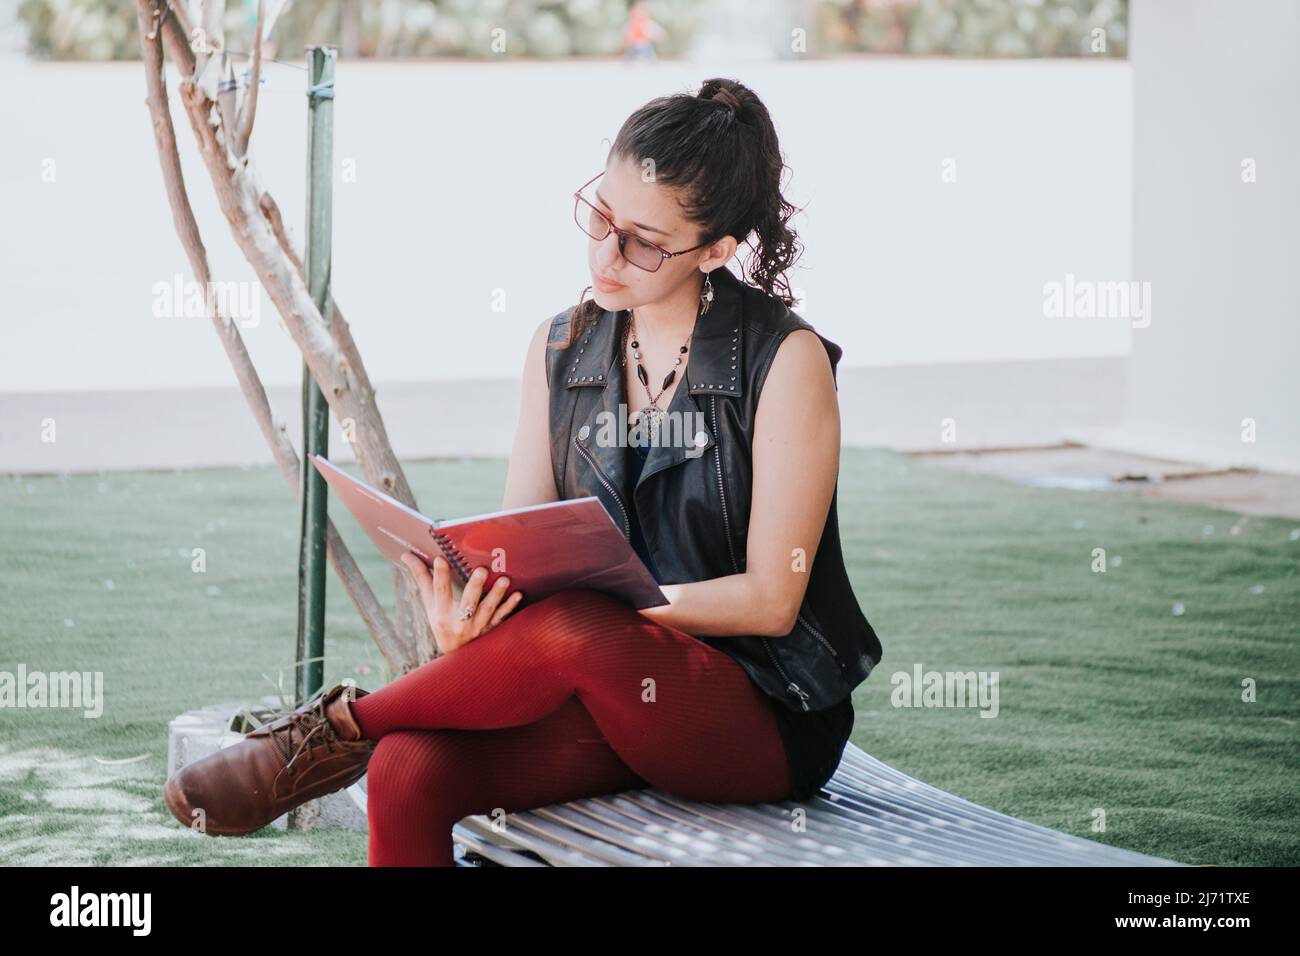 A student girl reading a book, urban girl sitting on a bench reading a book, Latin girl reading a book outside Stock Photo